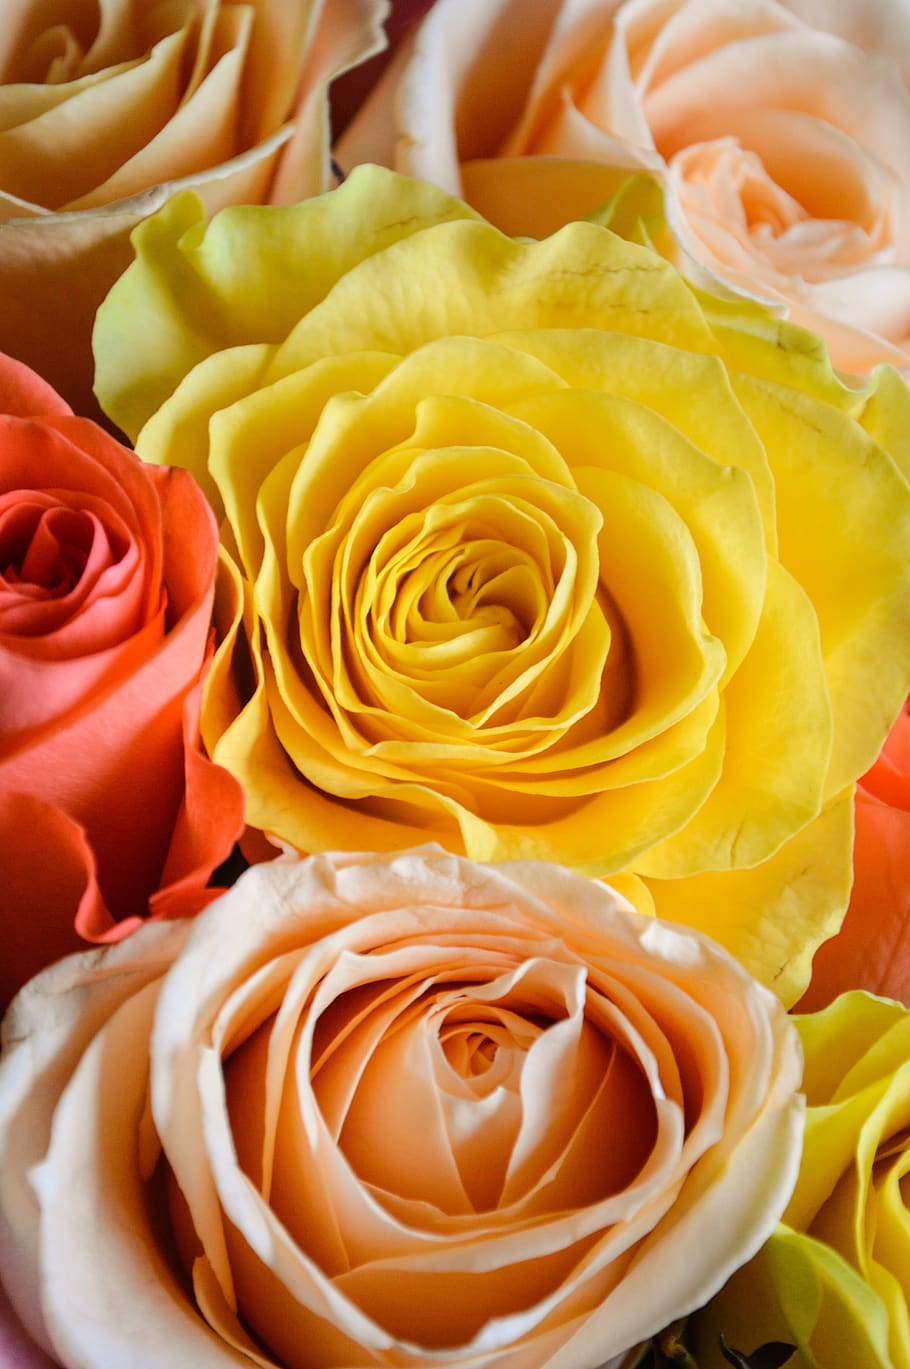 roses, bouquet, flowers, love, flower, flora, petals, novel, st valentine's day, gift